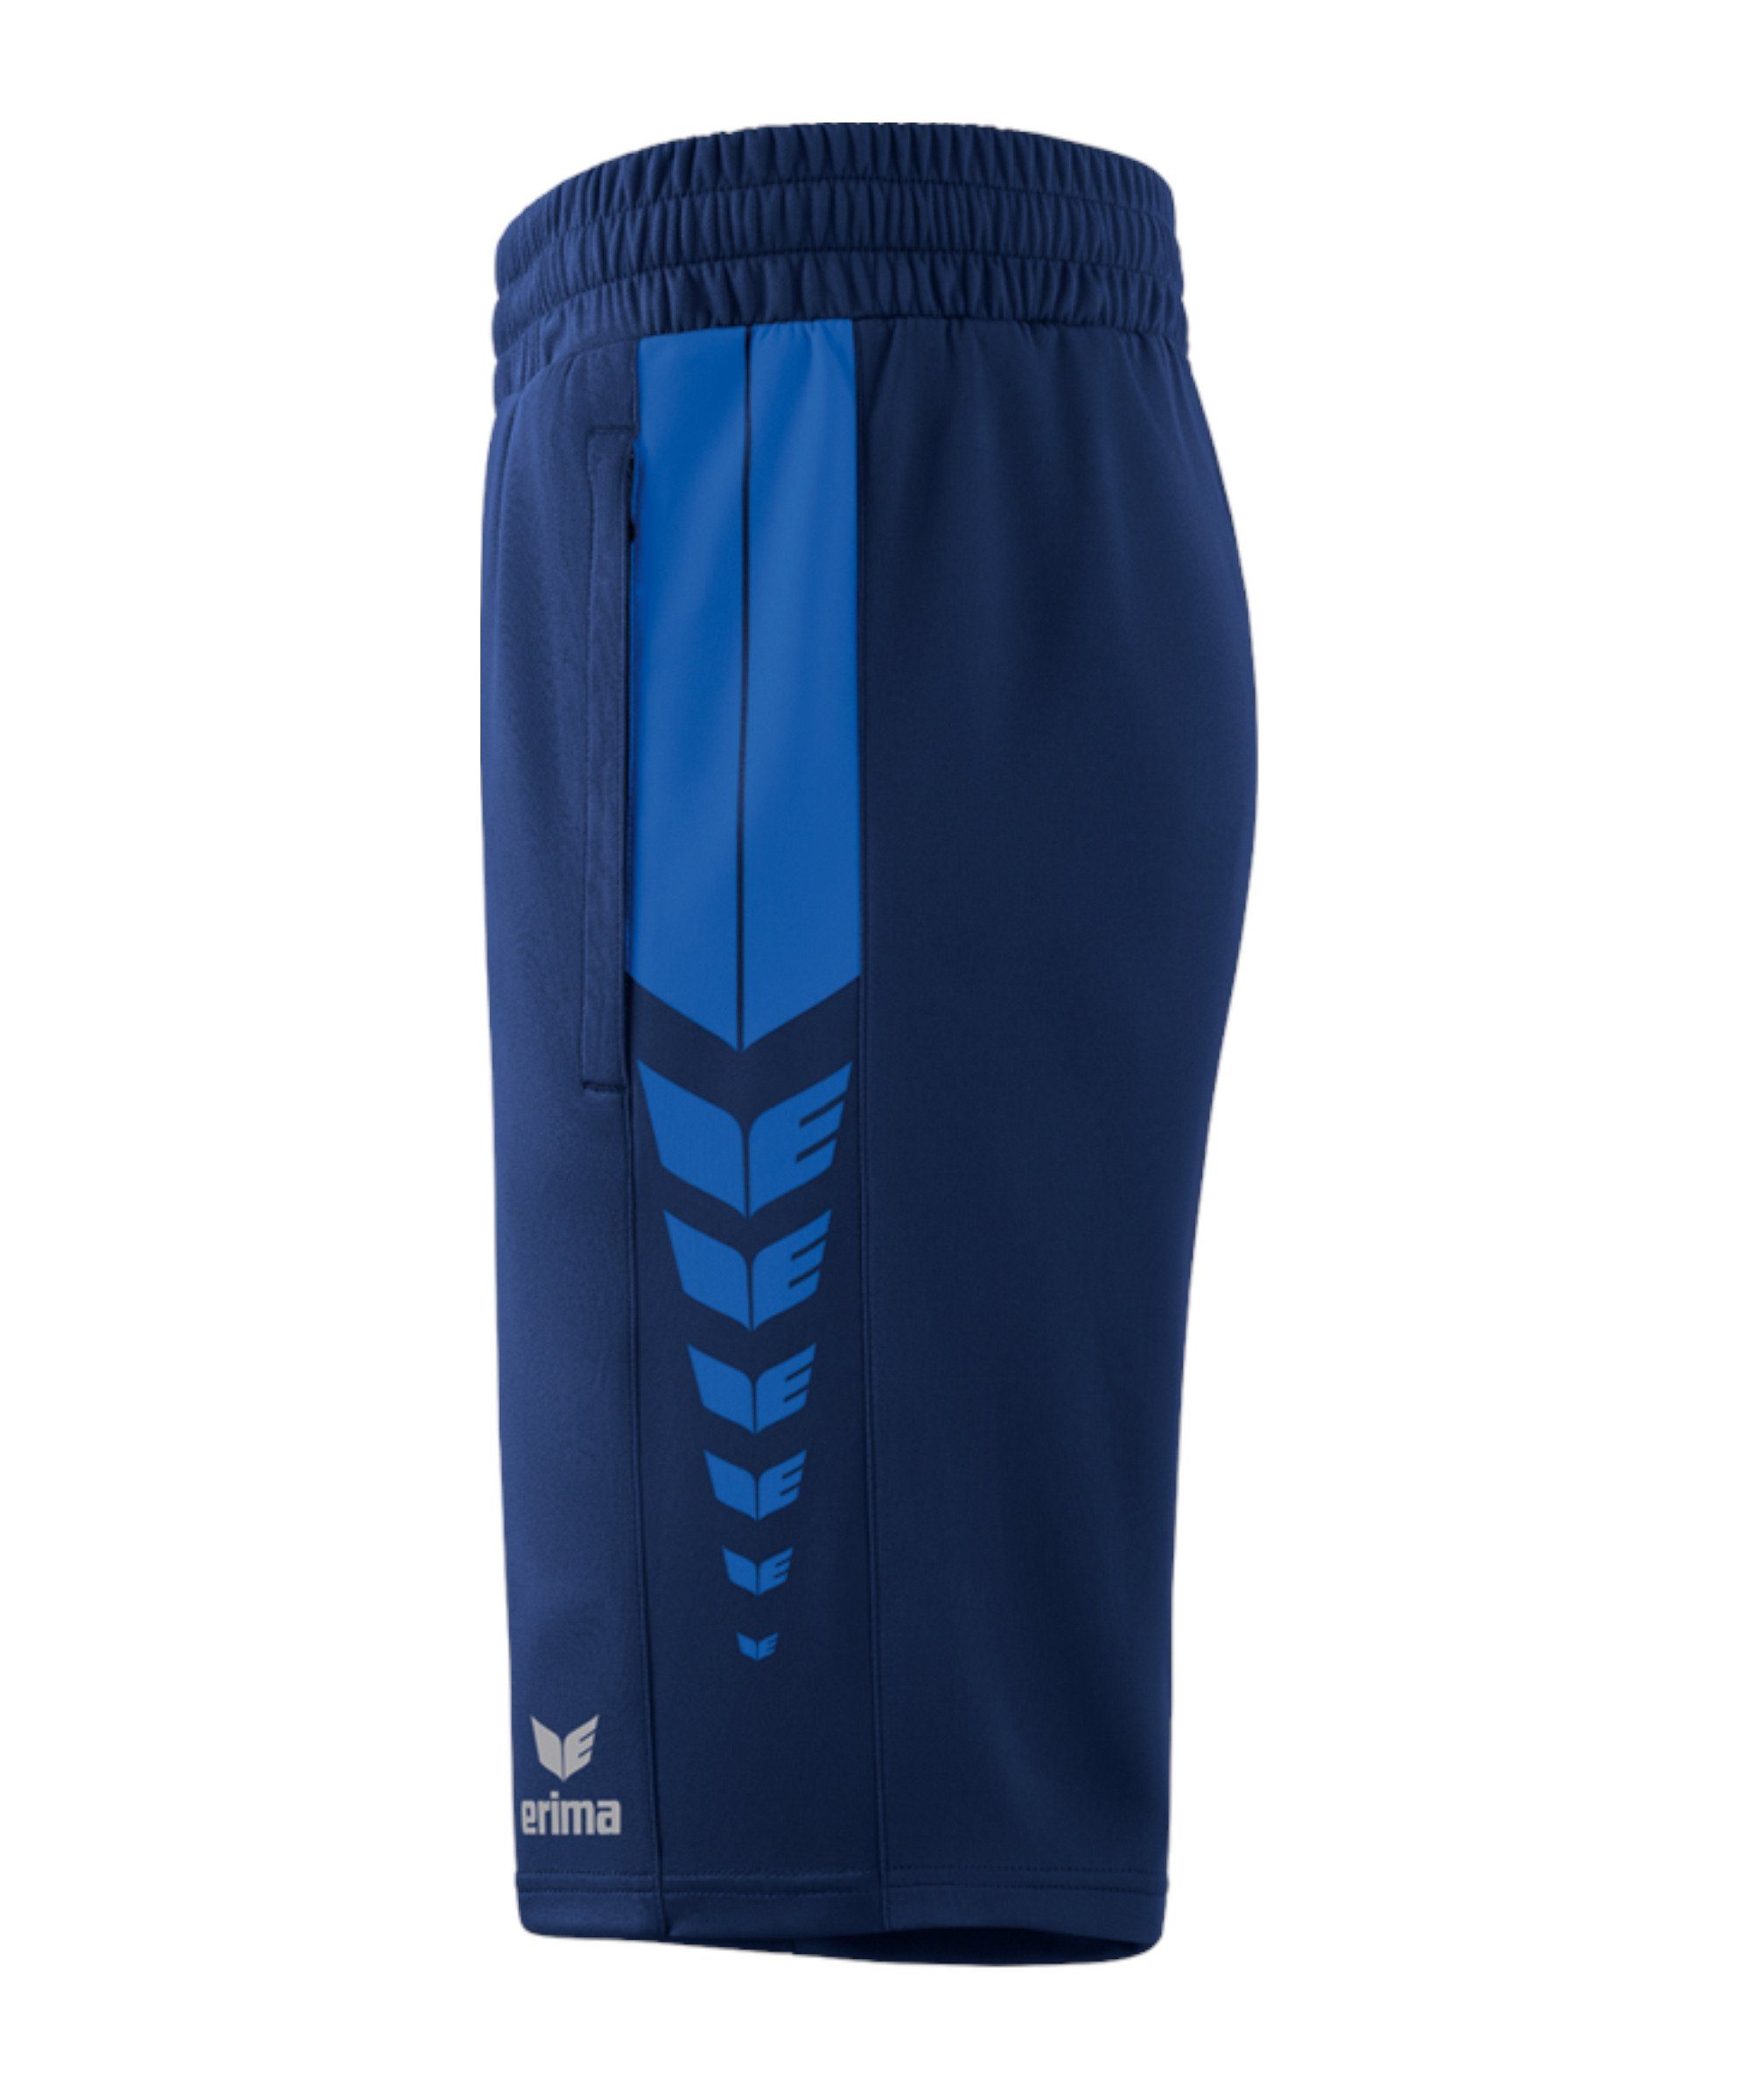 SIX Erima Short blau WINGS Sporthose